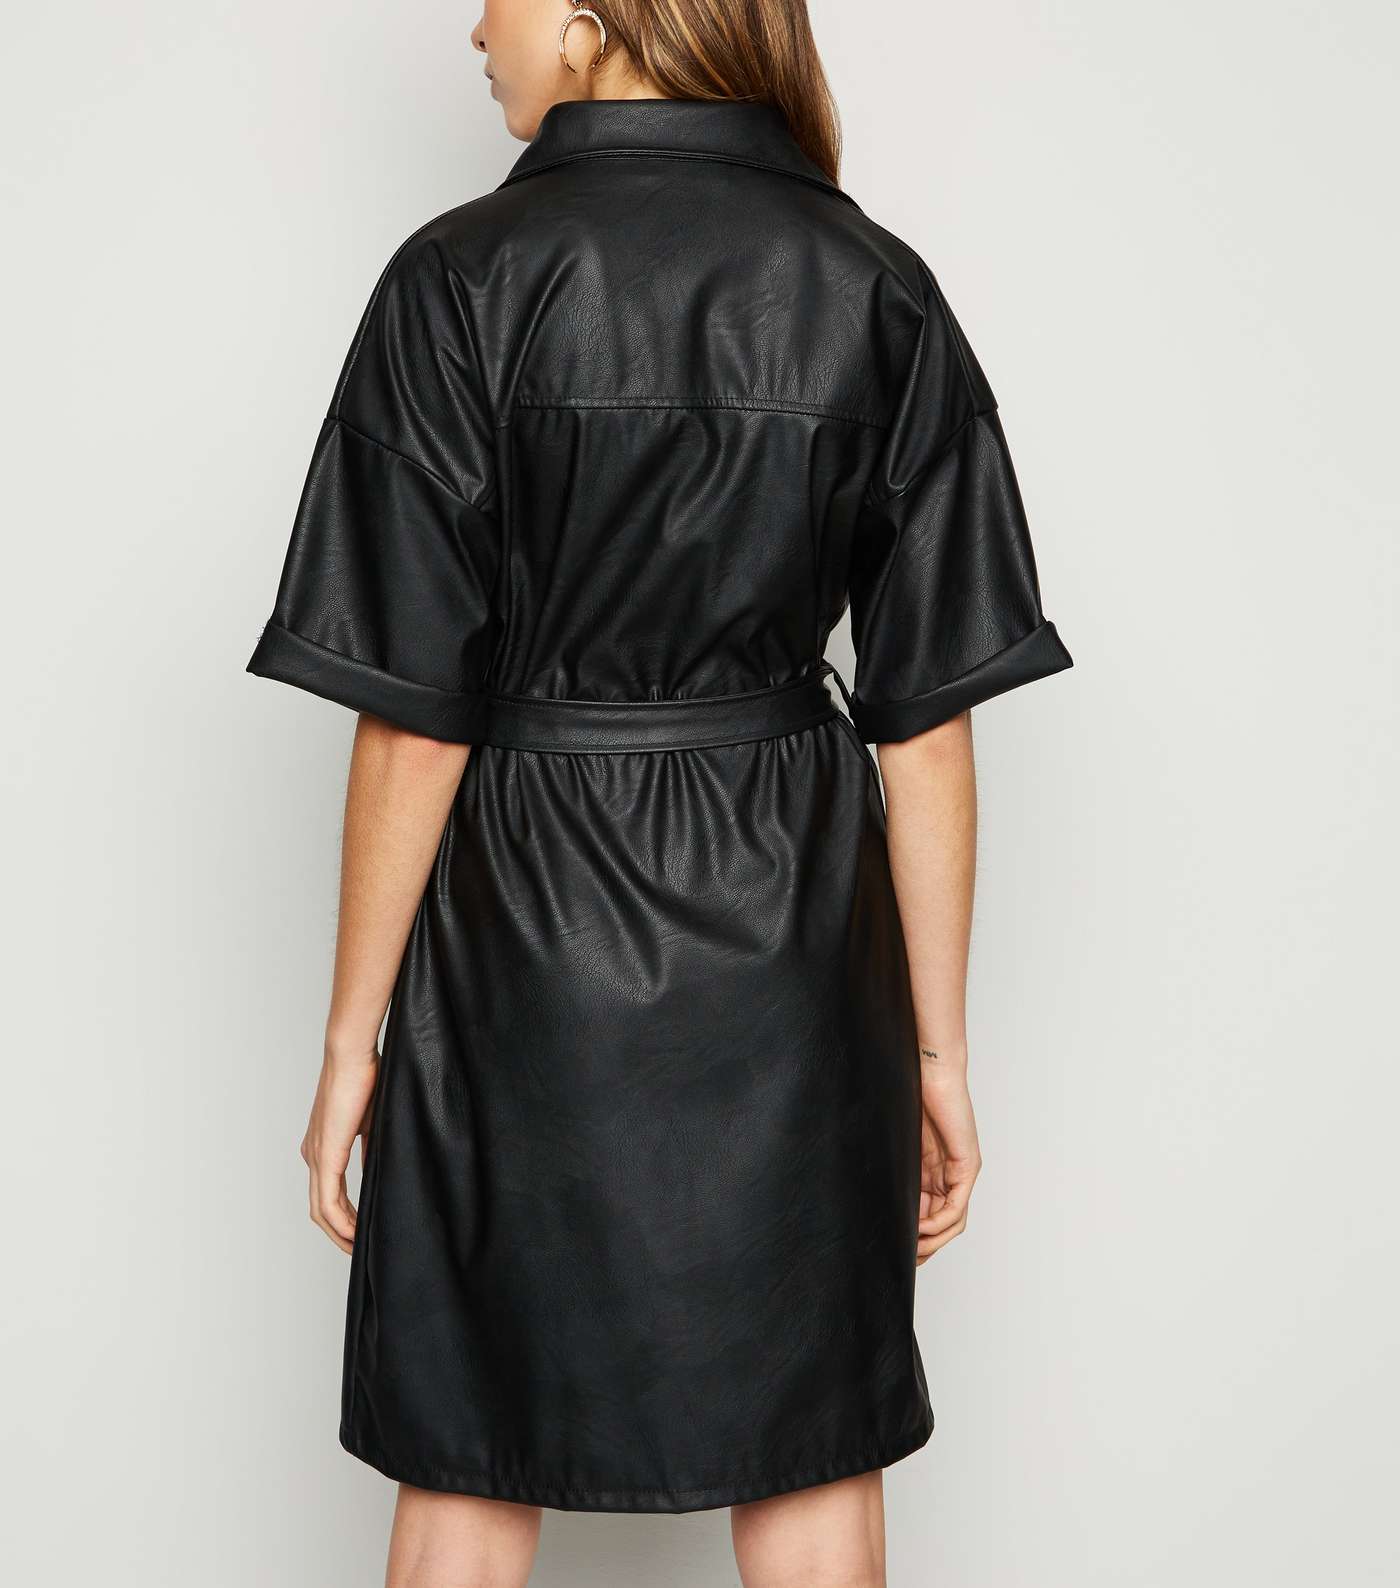 Cameo Rose Black Leather-Look Shirt Dress Image 3